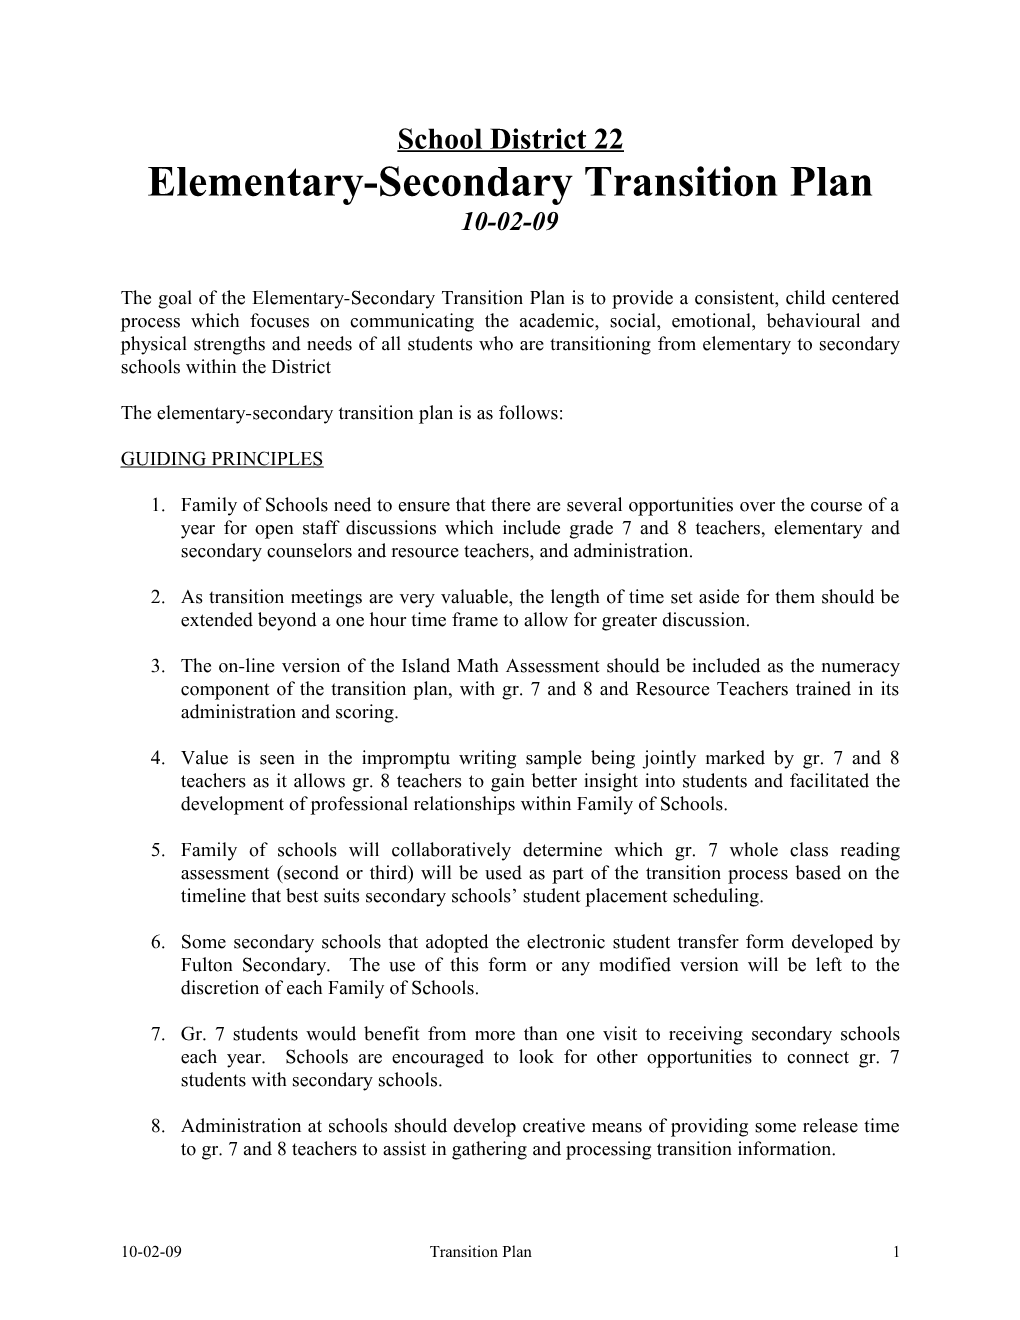 Elementary-Secondary Transition Plan